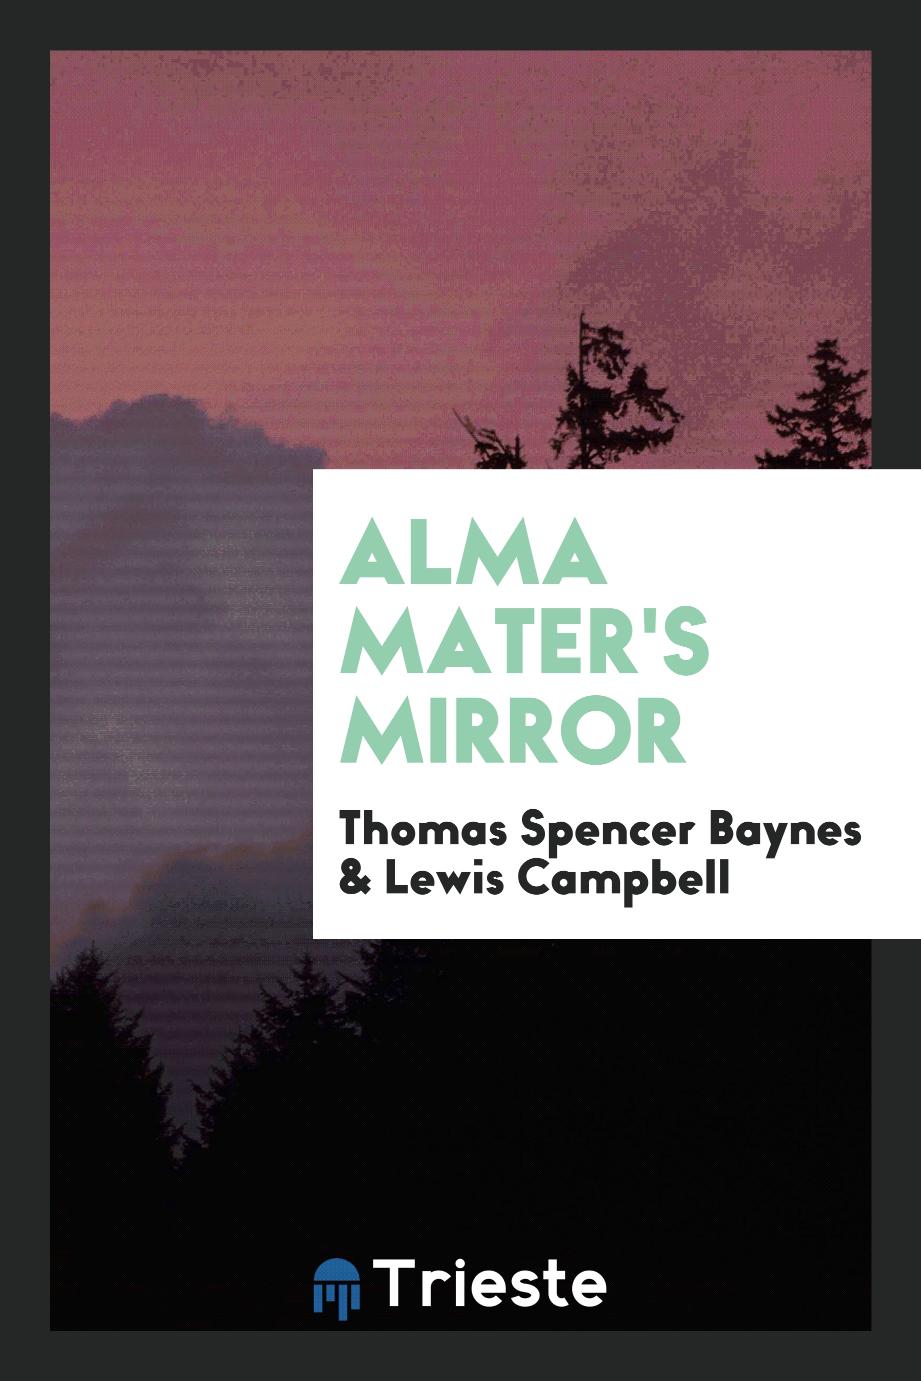 Alma Mater's mirror